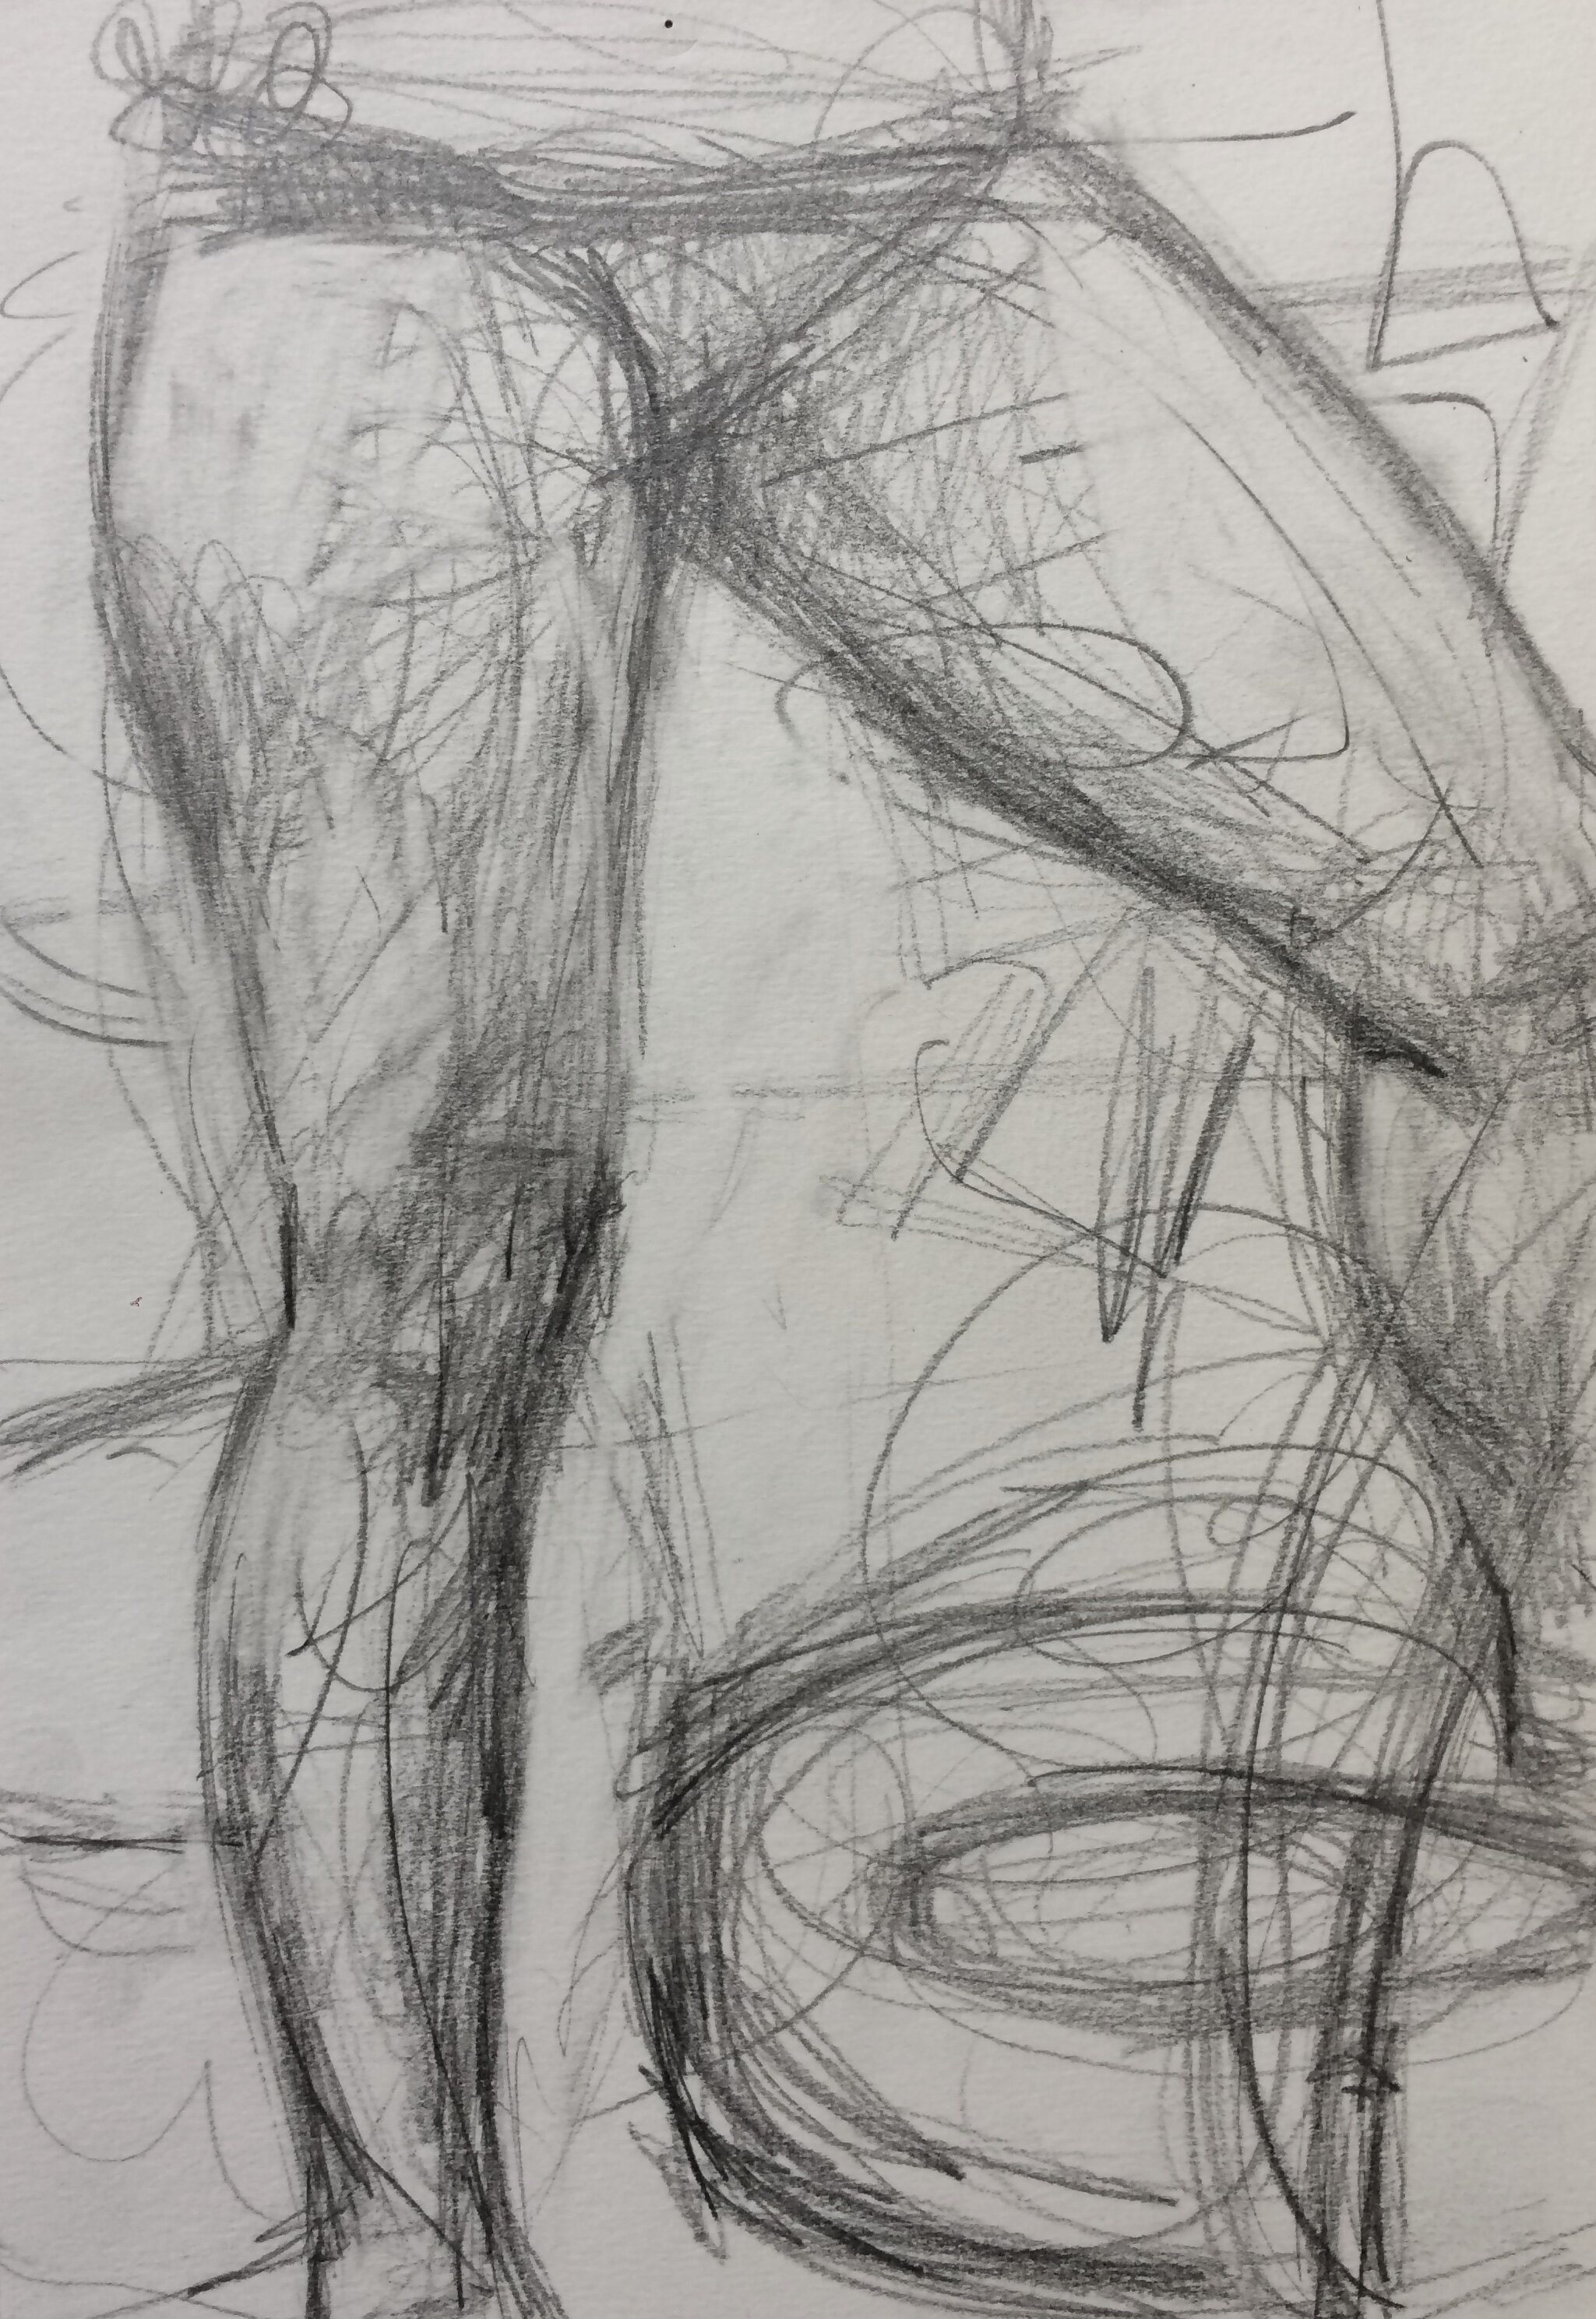  Graphite on paper,   12 x 9,”  2017 